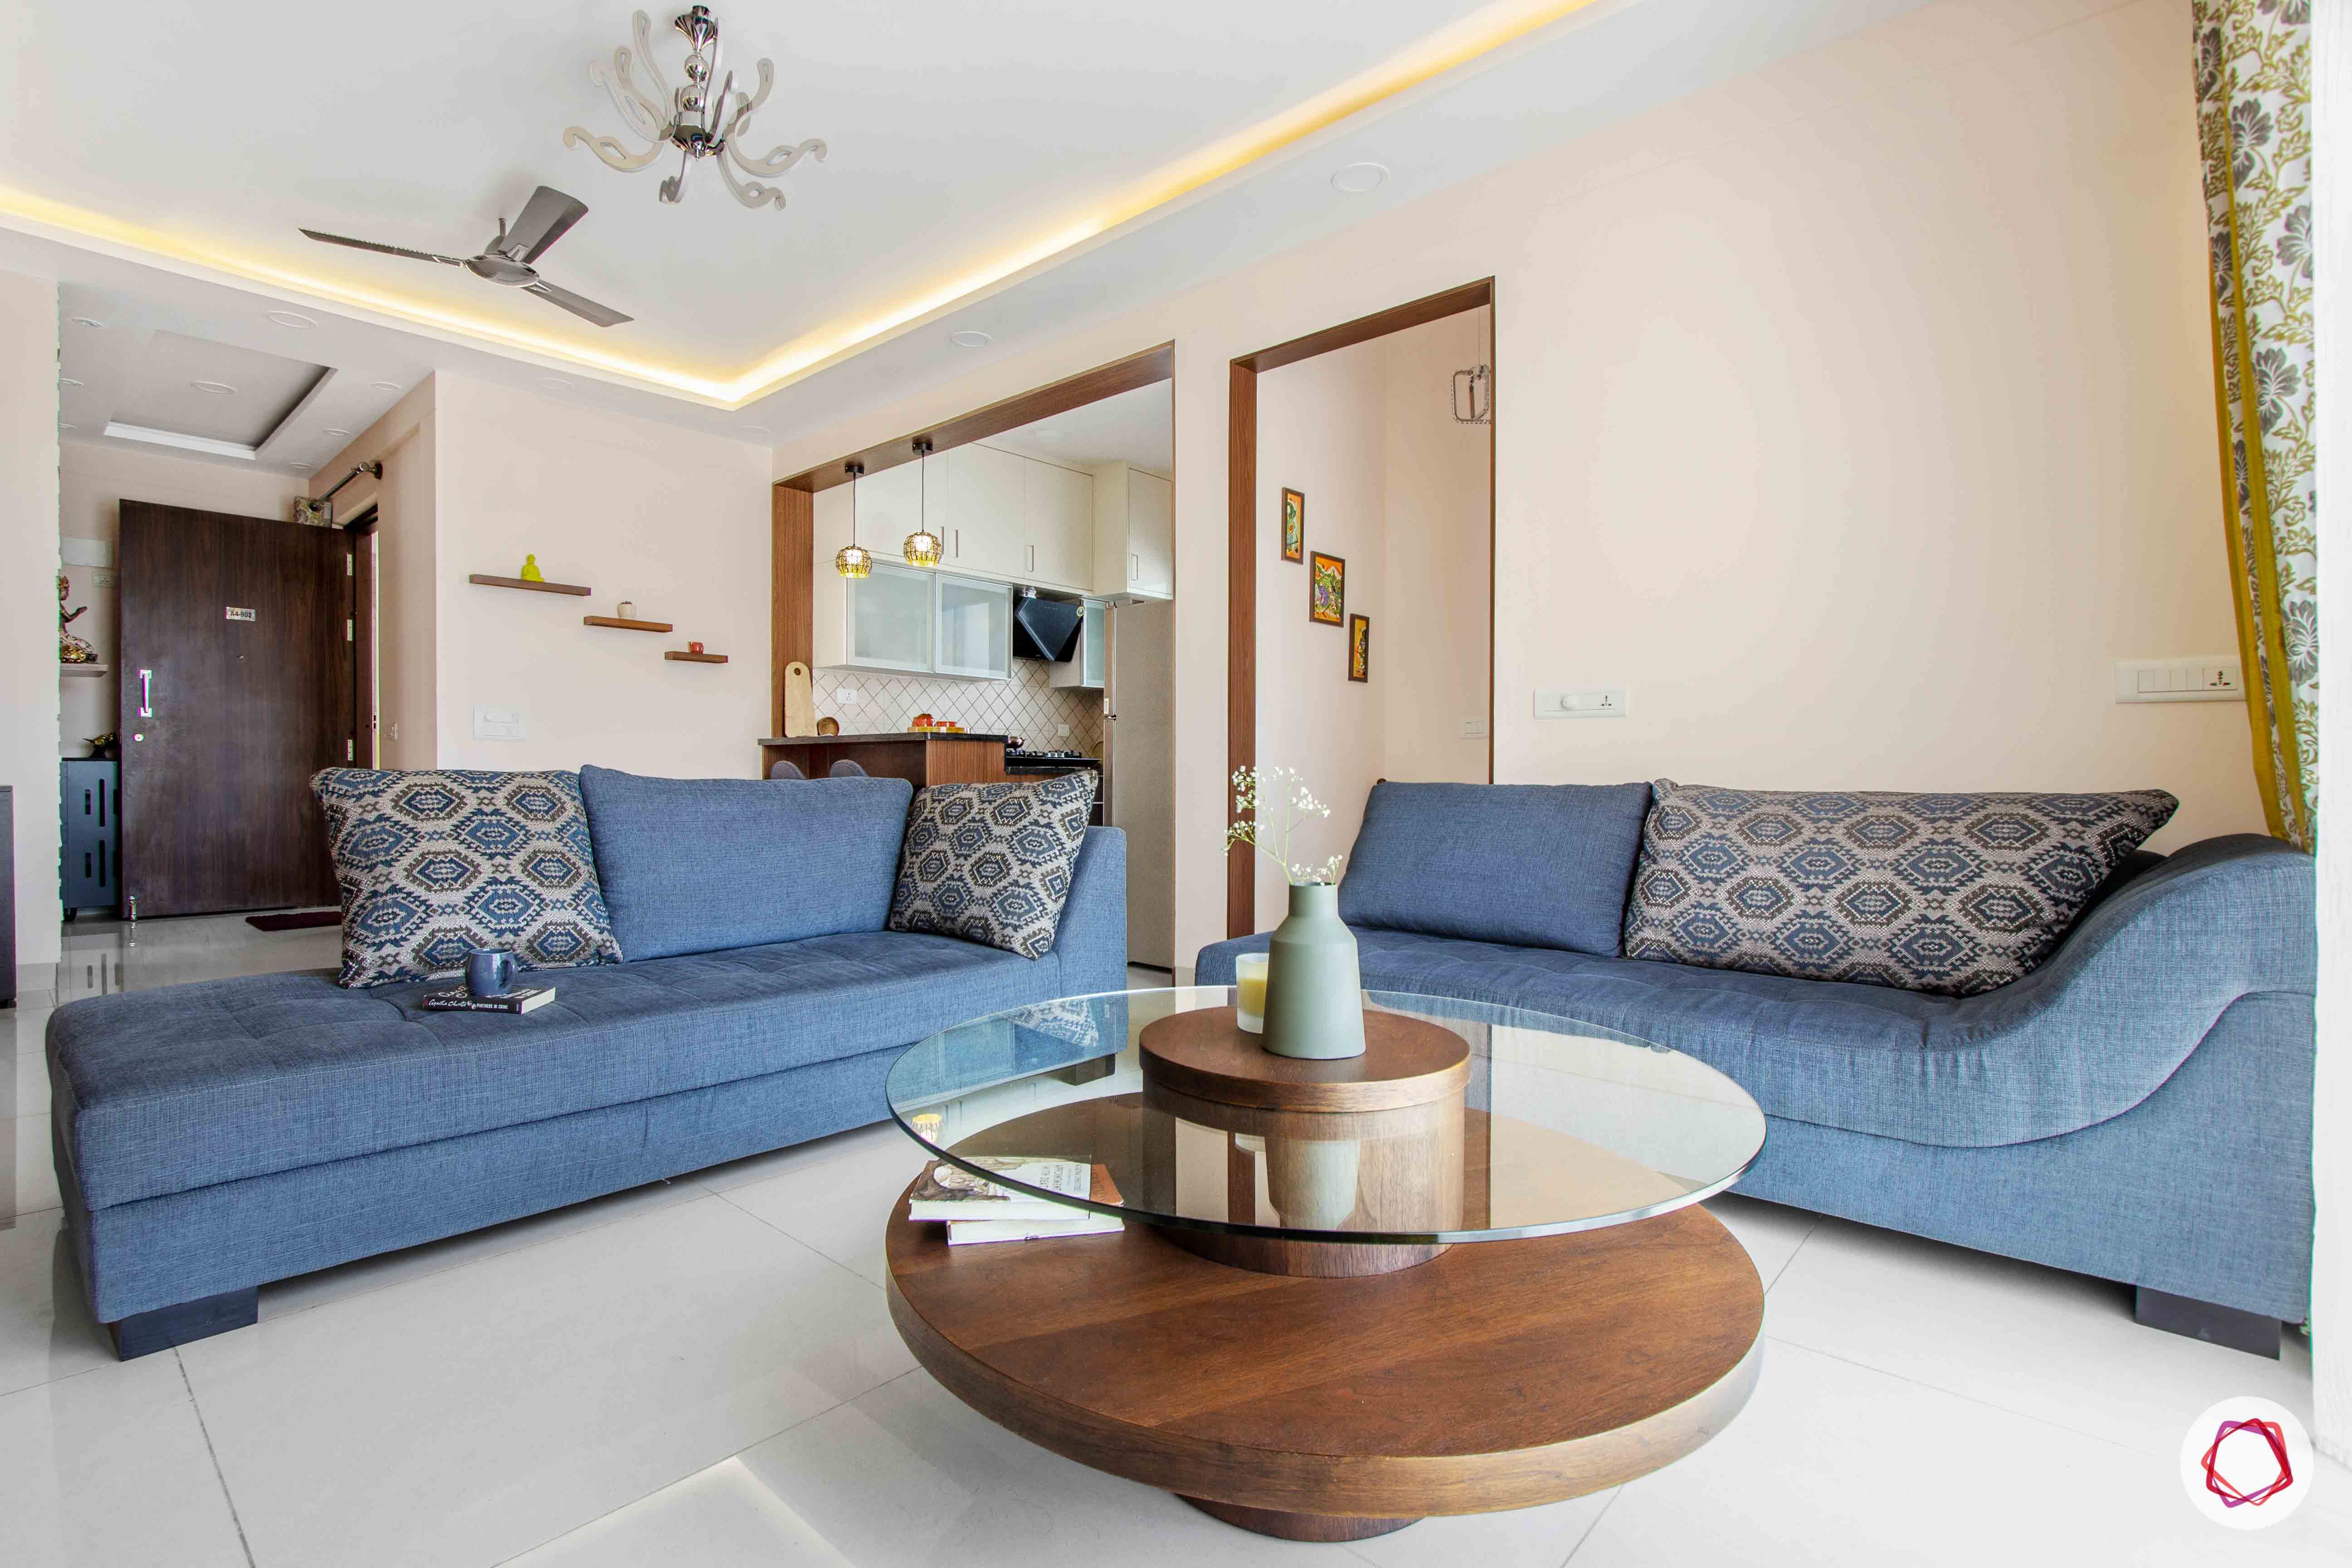 snn raj greenbay-living room-full home-wooden centre table